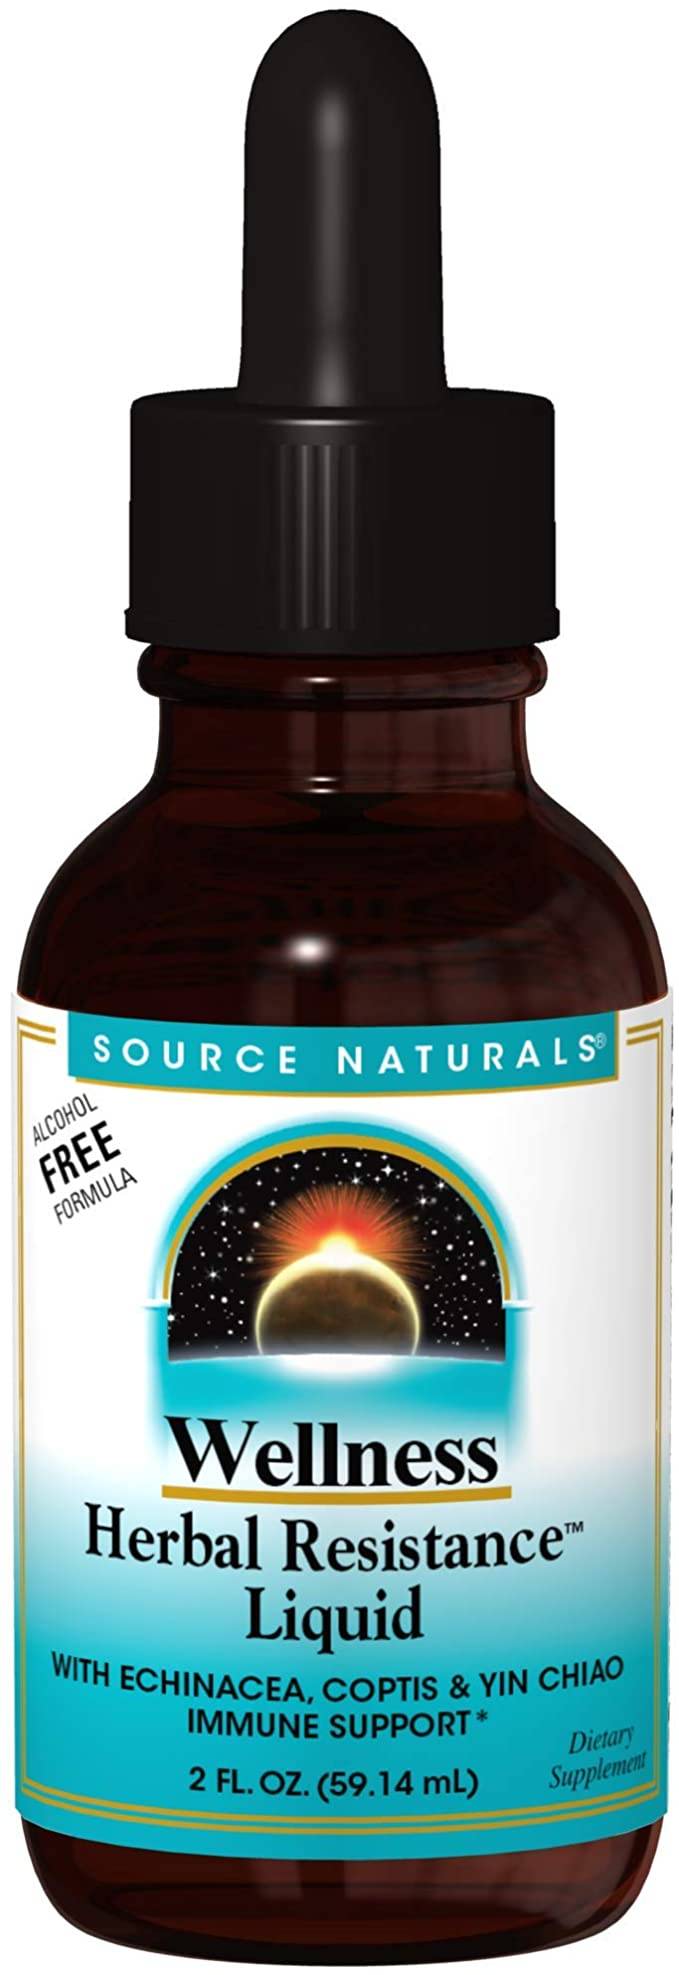 Wellness Herbal Resistance Liquid by Source Naturals